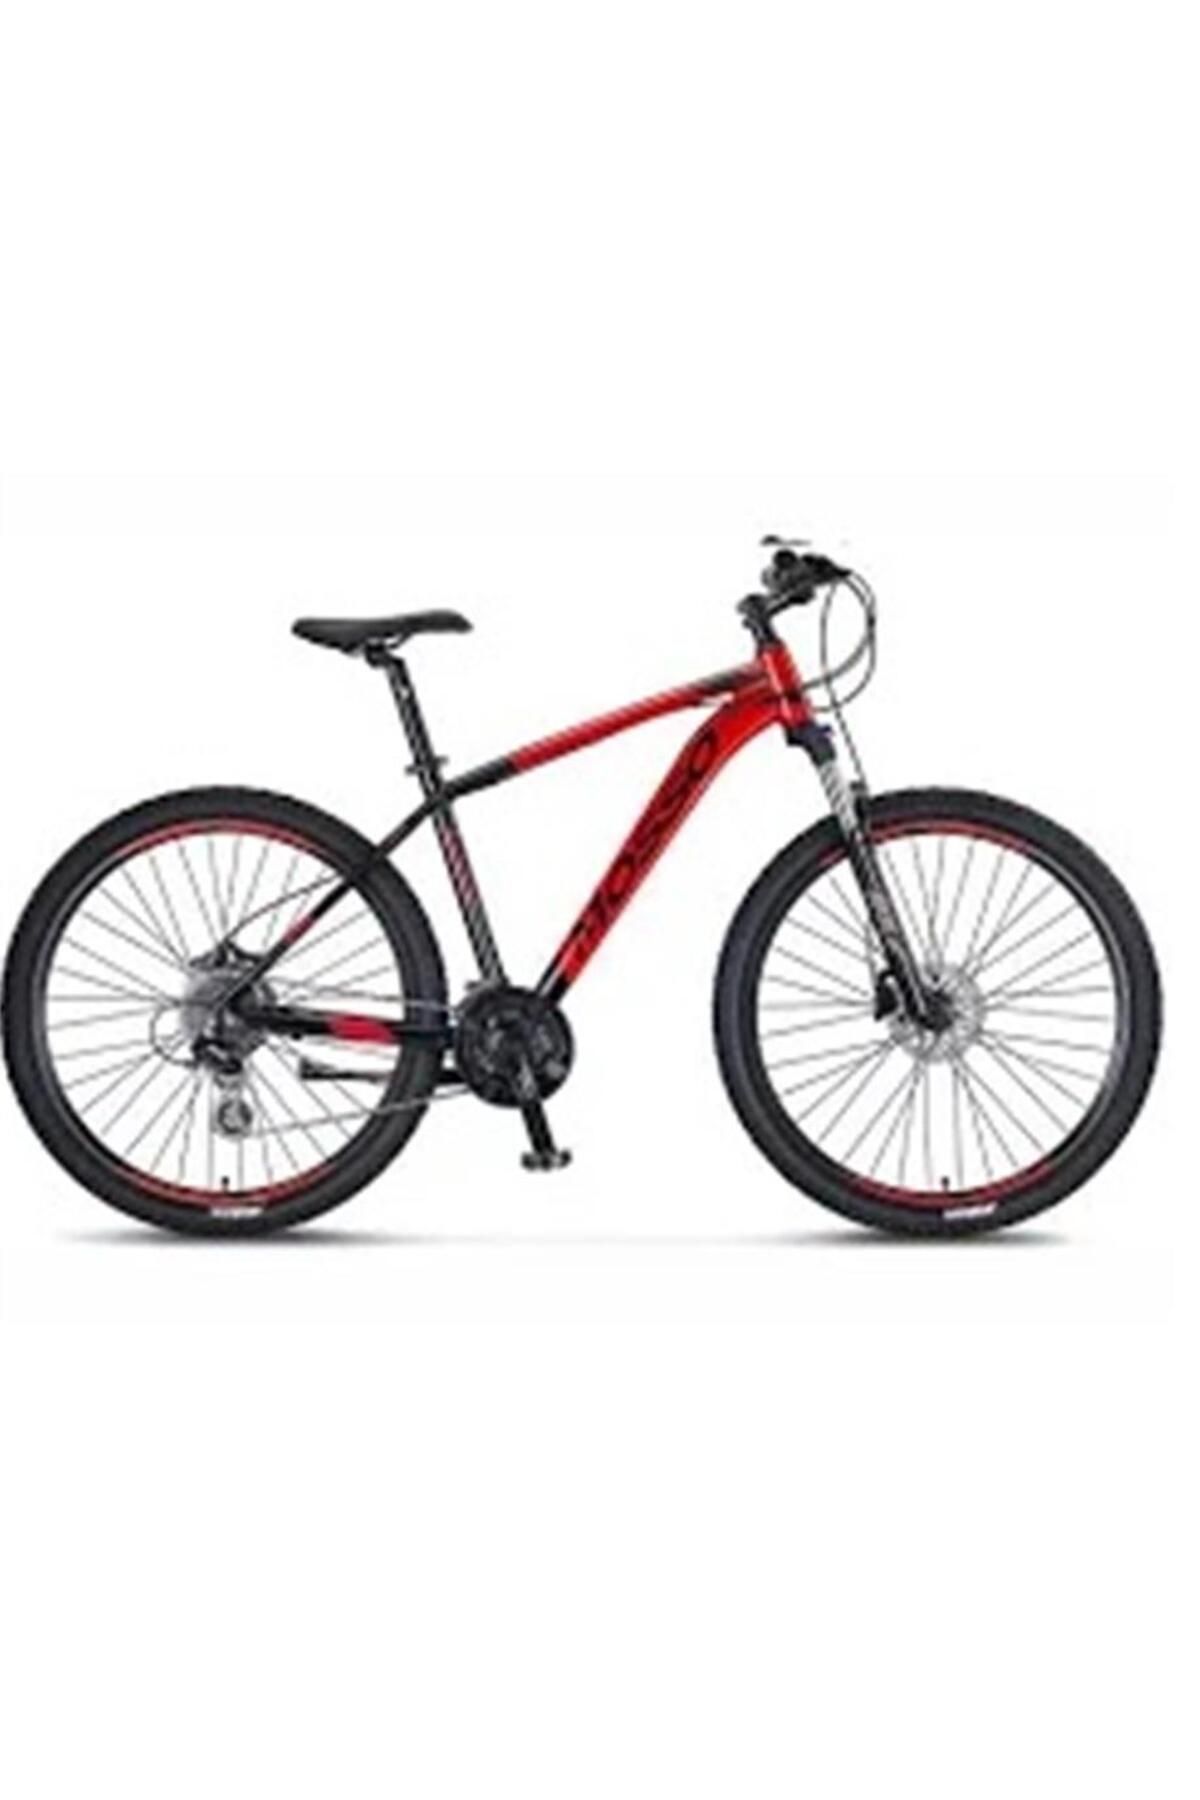 Mosso Racelıne-29-h Erkek Dağ Bisikleti 460h Hd 29 Jant 24 Vites Kırmızı Siyah